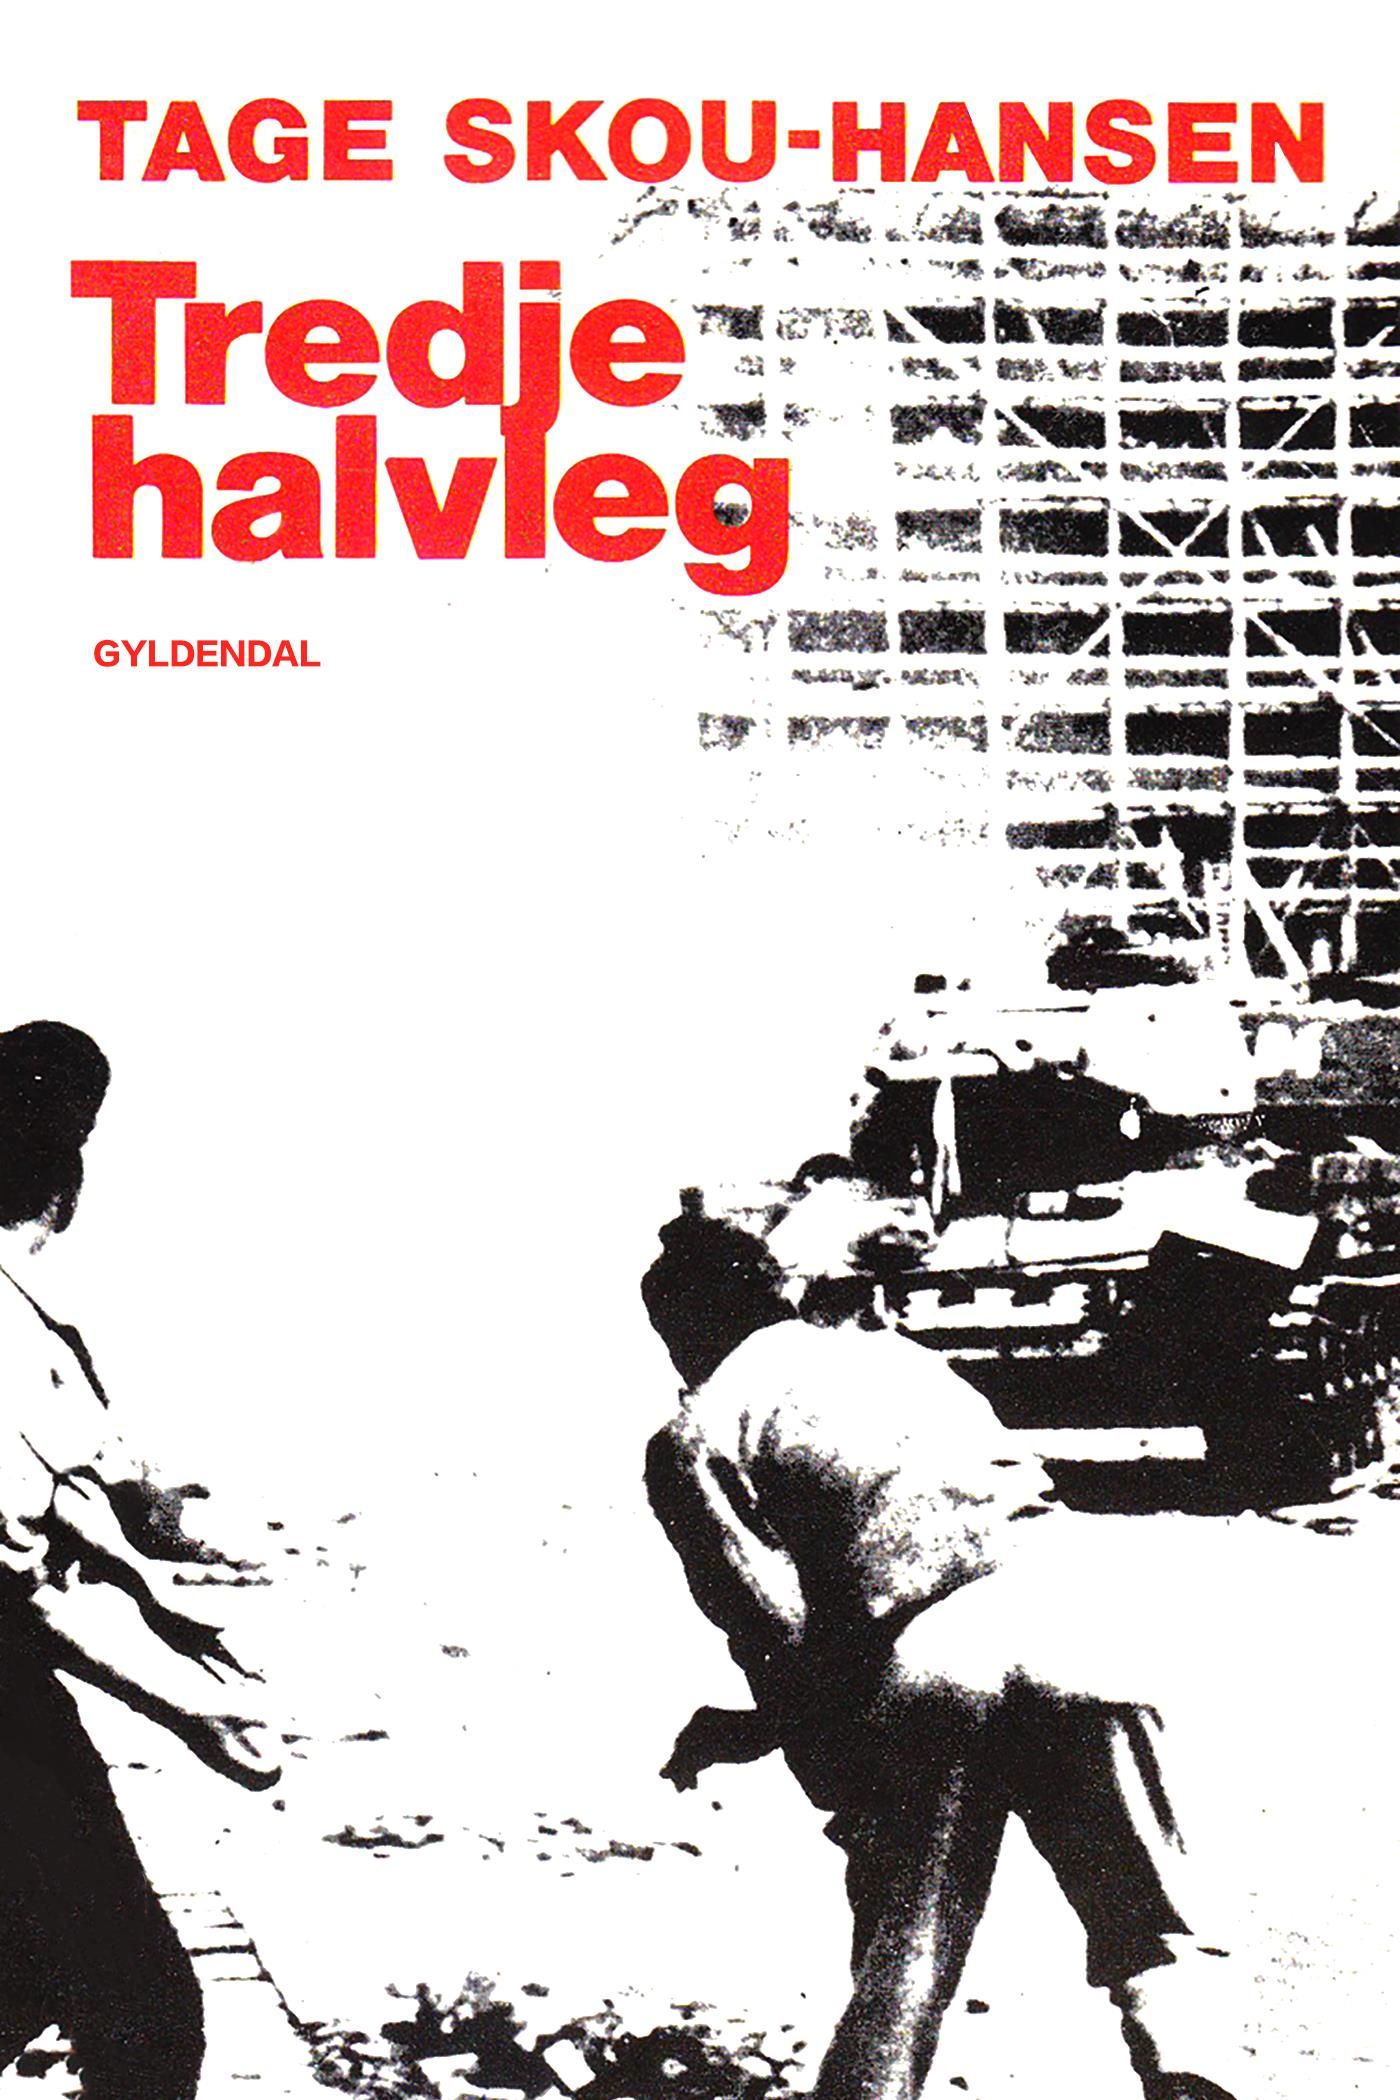 Tredje halvleg, eBook by Tage Skou-Hansen